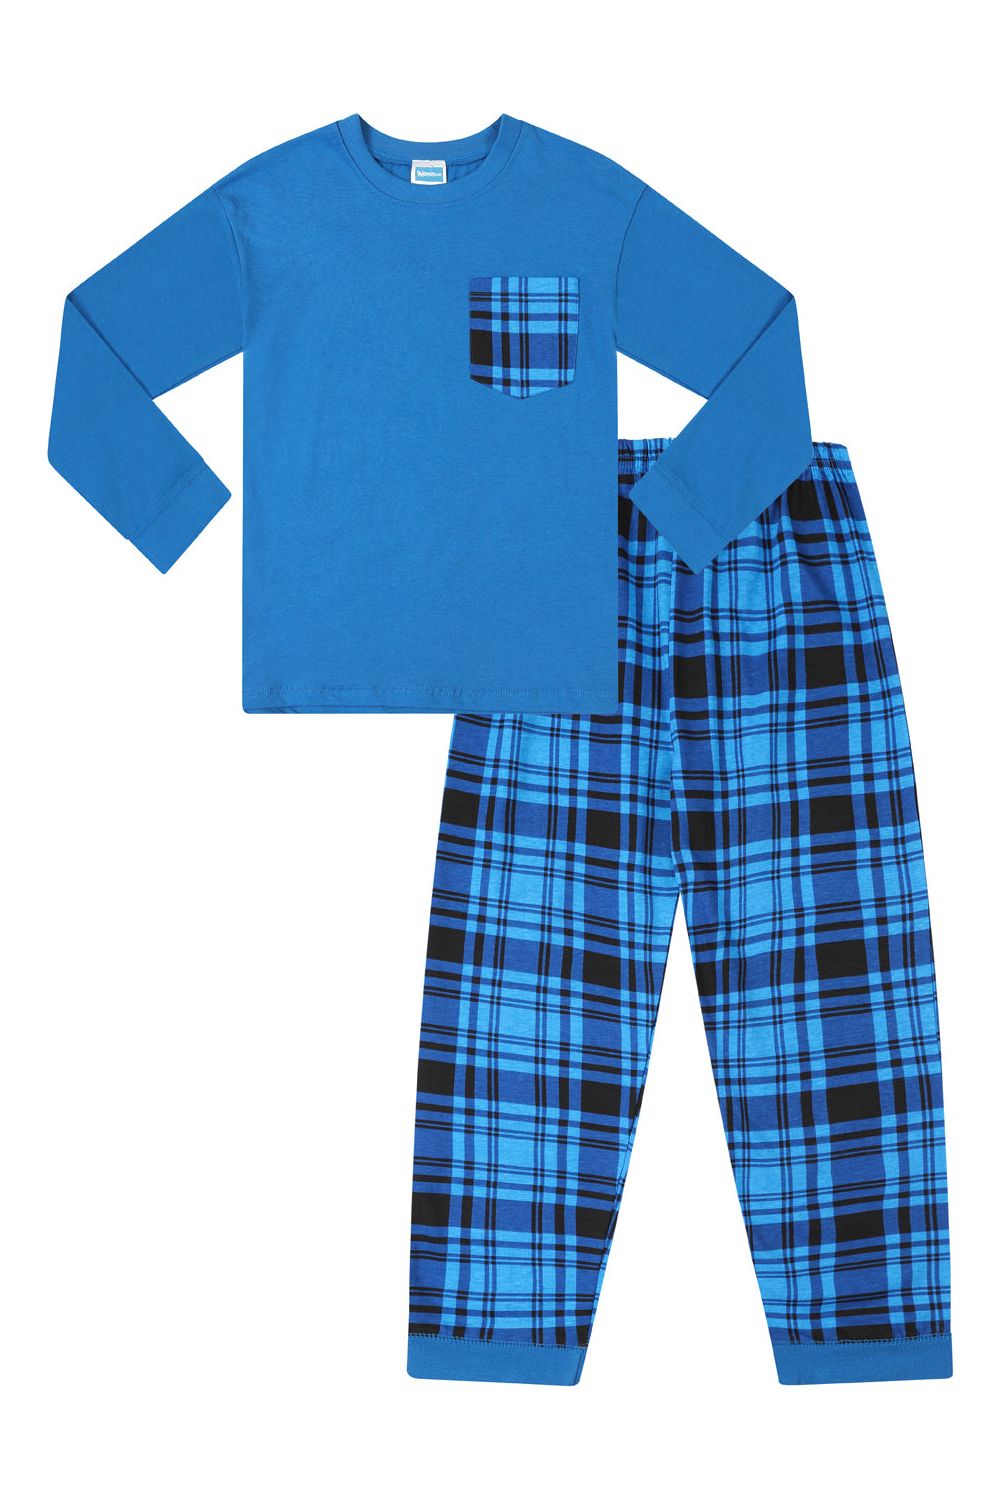 Boys Blue Check Cotton Long Pyjamas - Pyjamas.com